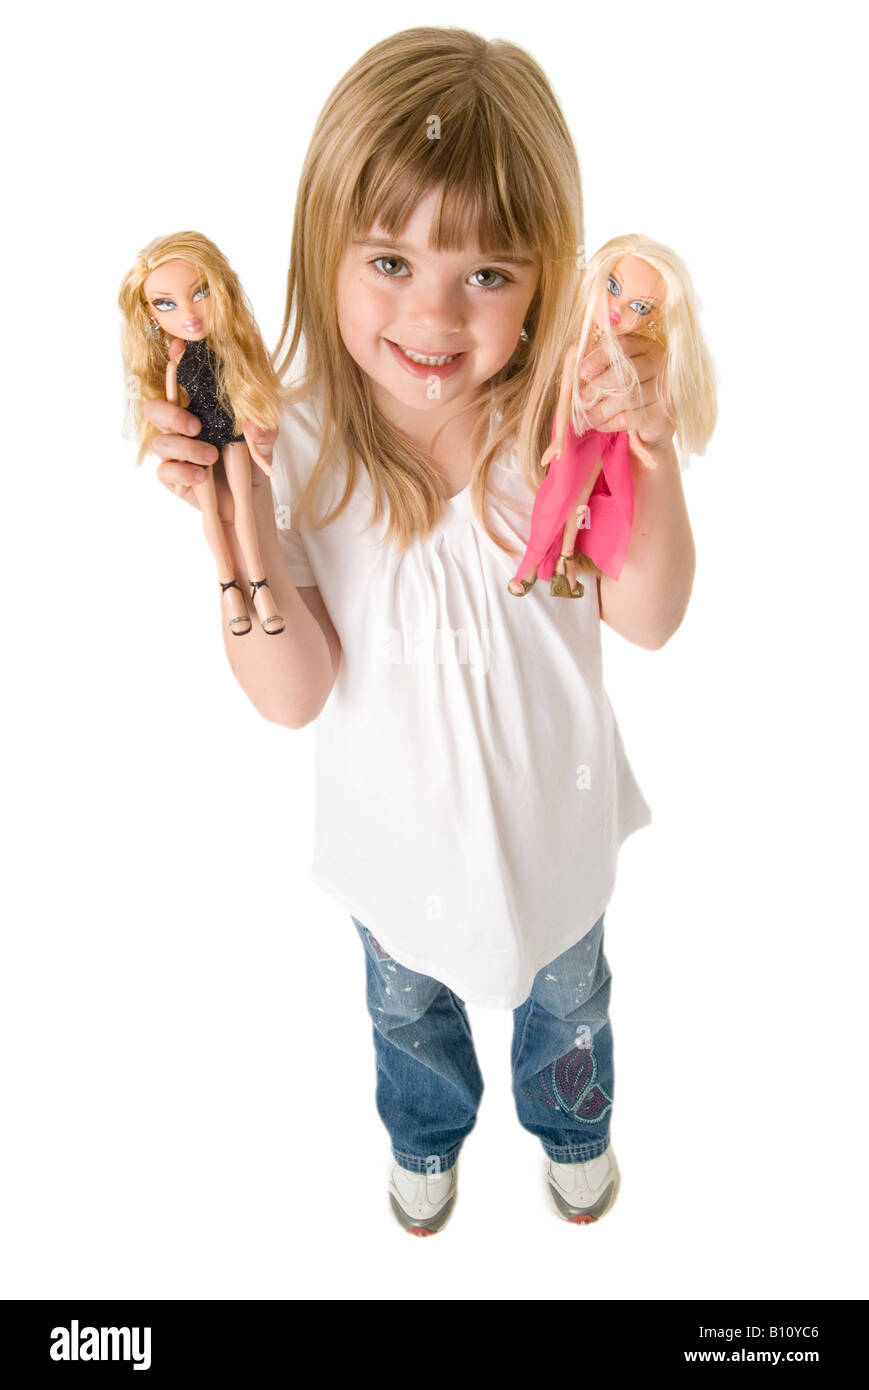 bratz doll toy young girl body image cartoon distorted bimbo fashion trendy industry marketing Stock Photo